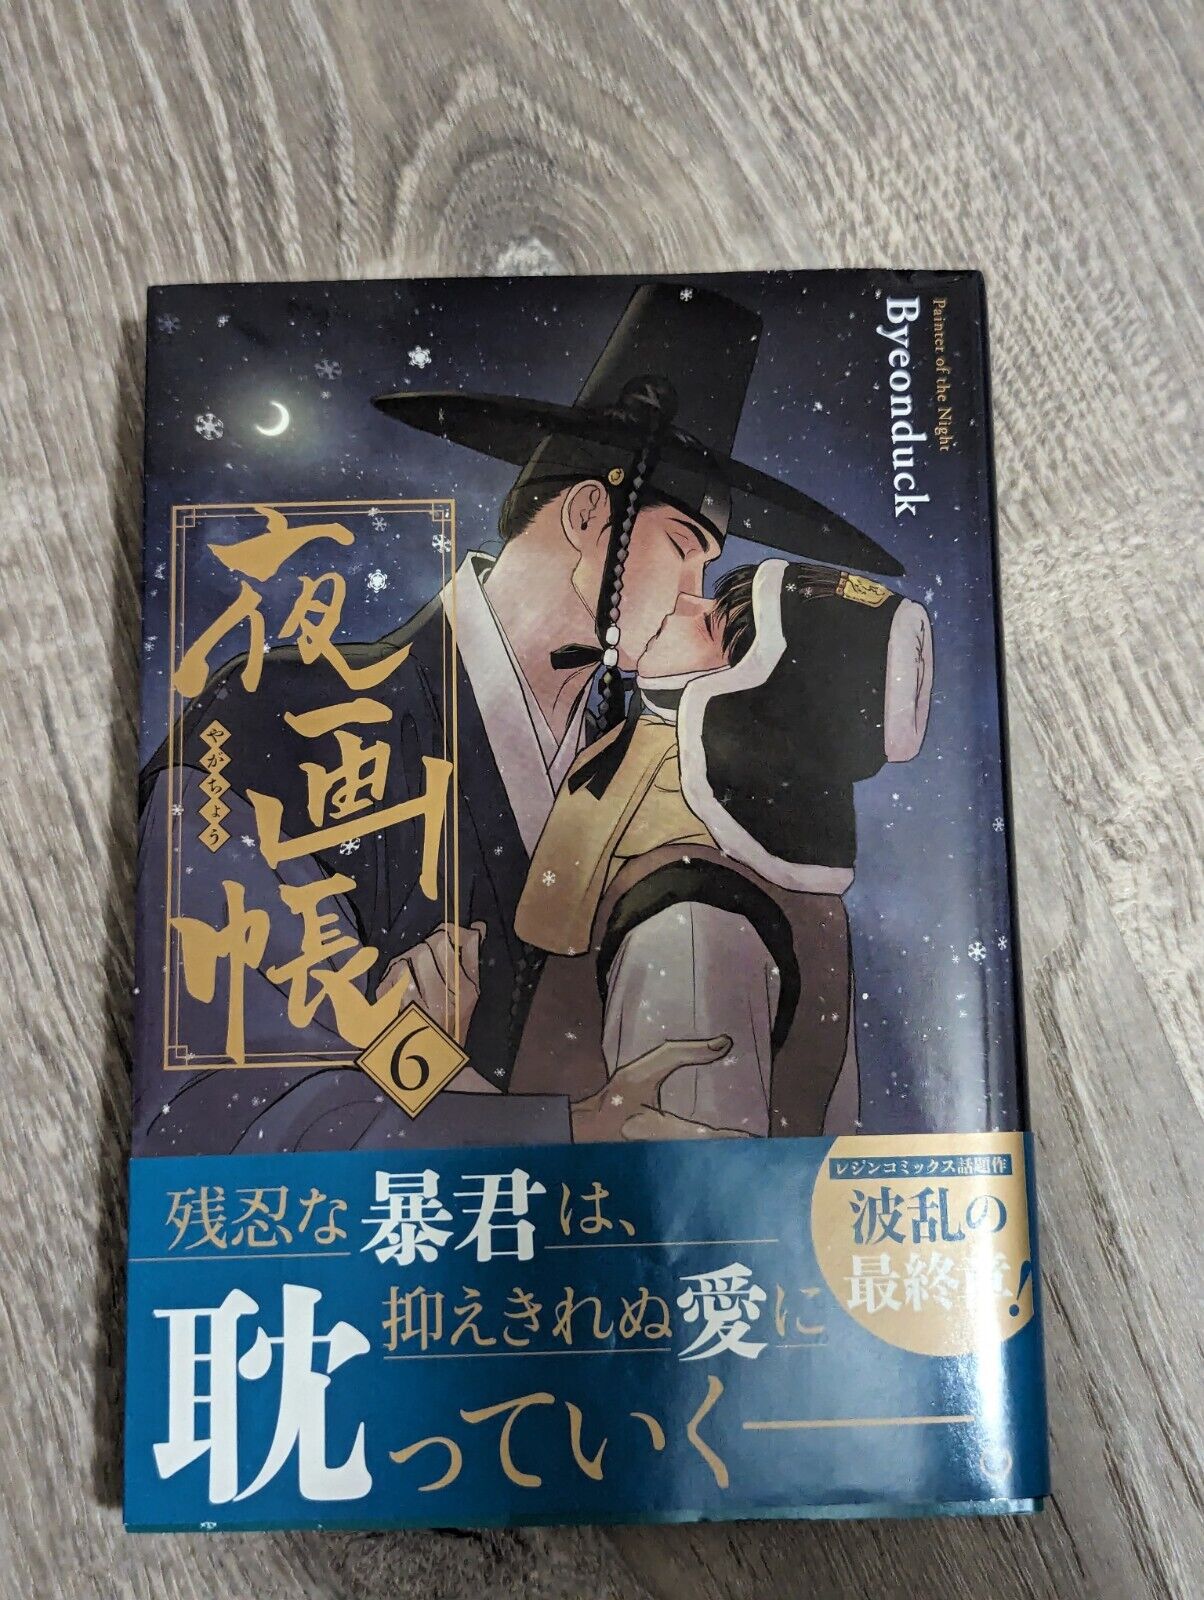 Painter Of The Night Vol 6 Manga (Japanese)